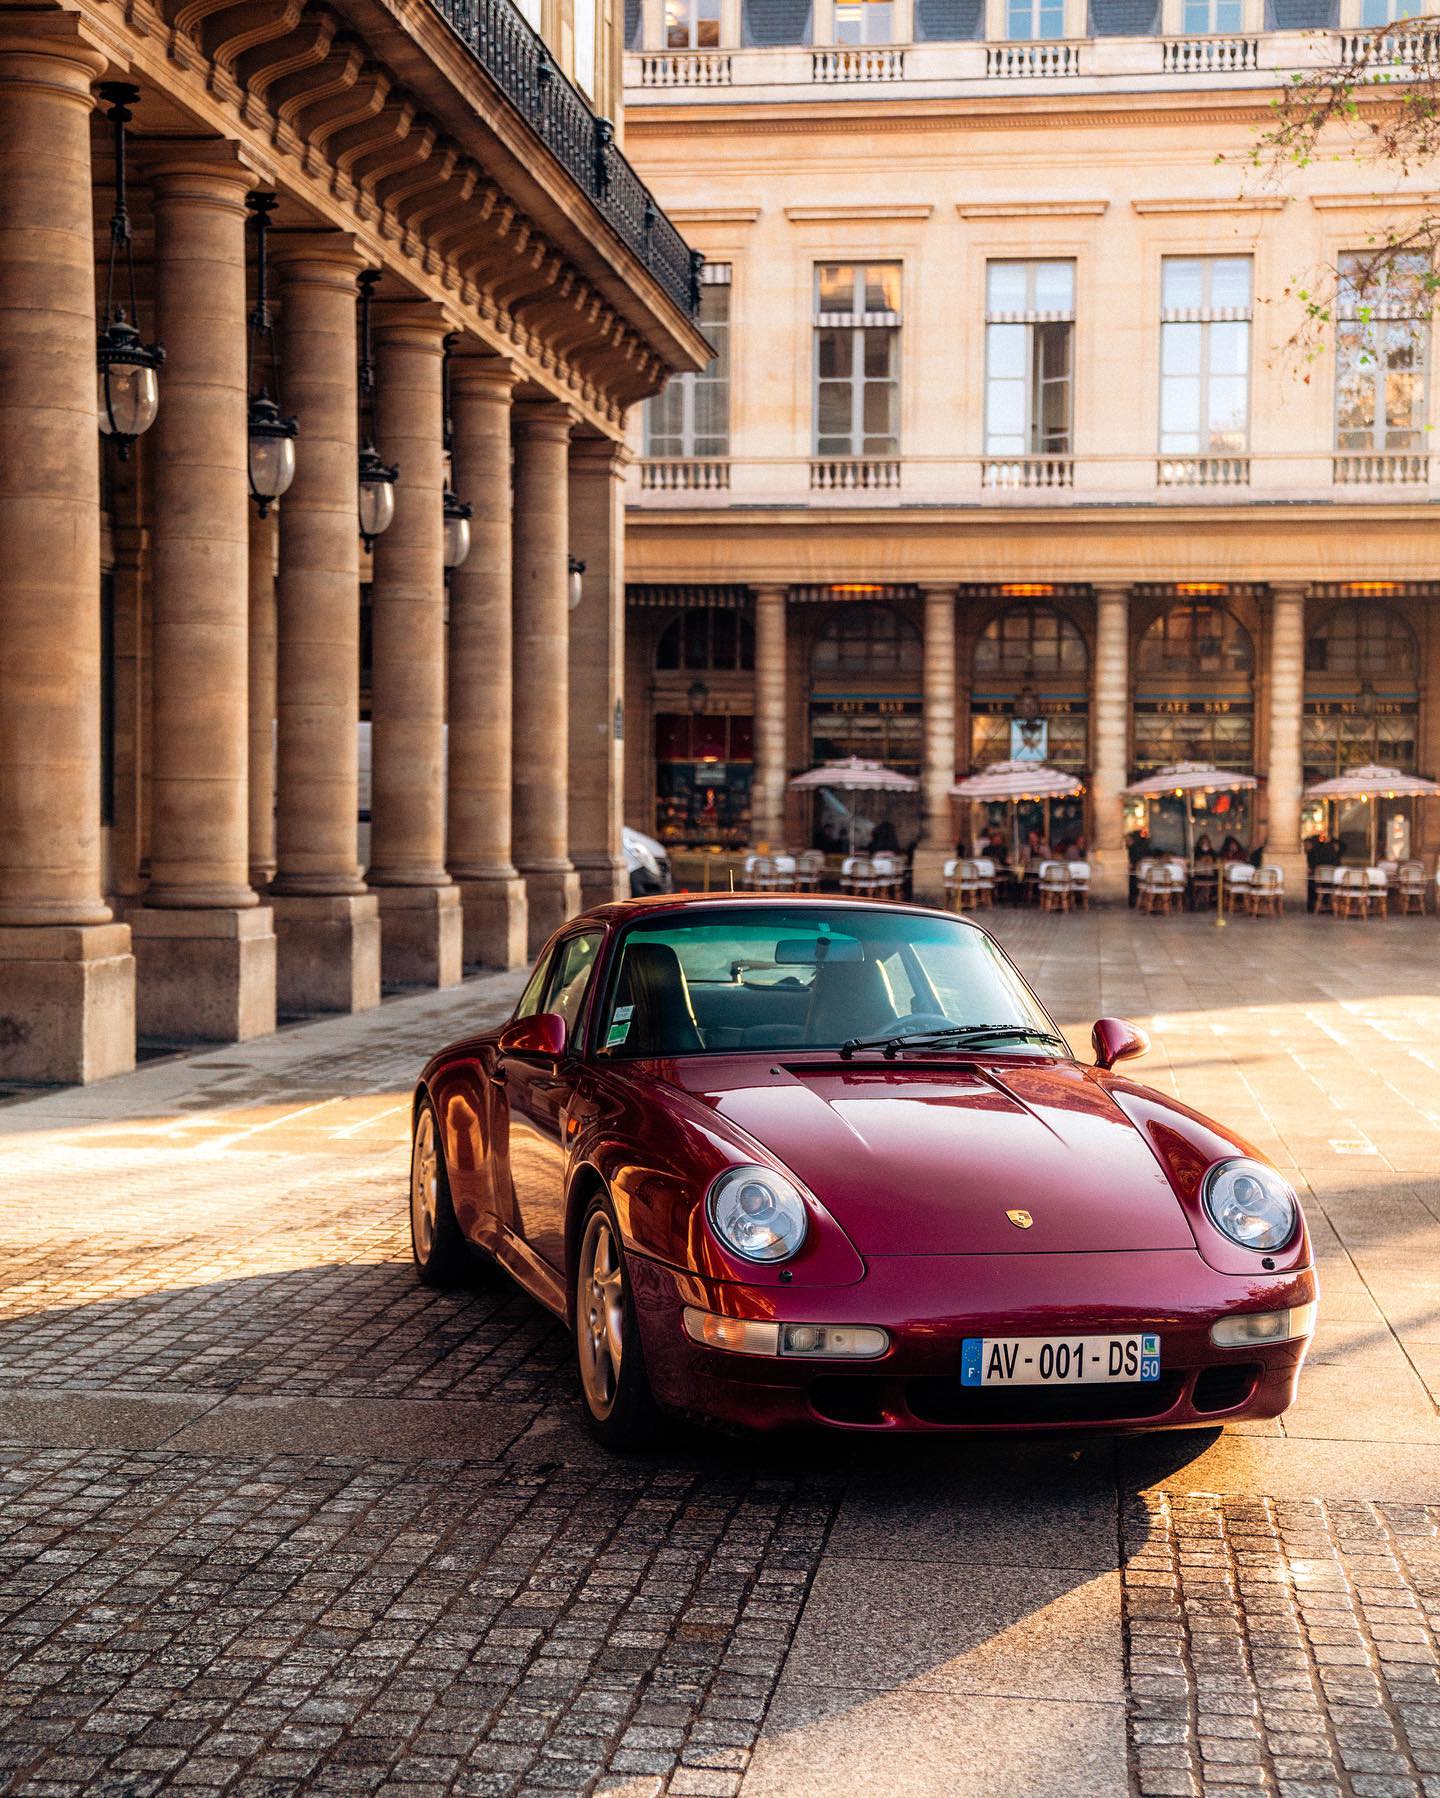 Arena red Porsche 911 parked in sunlit Parisian square